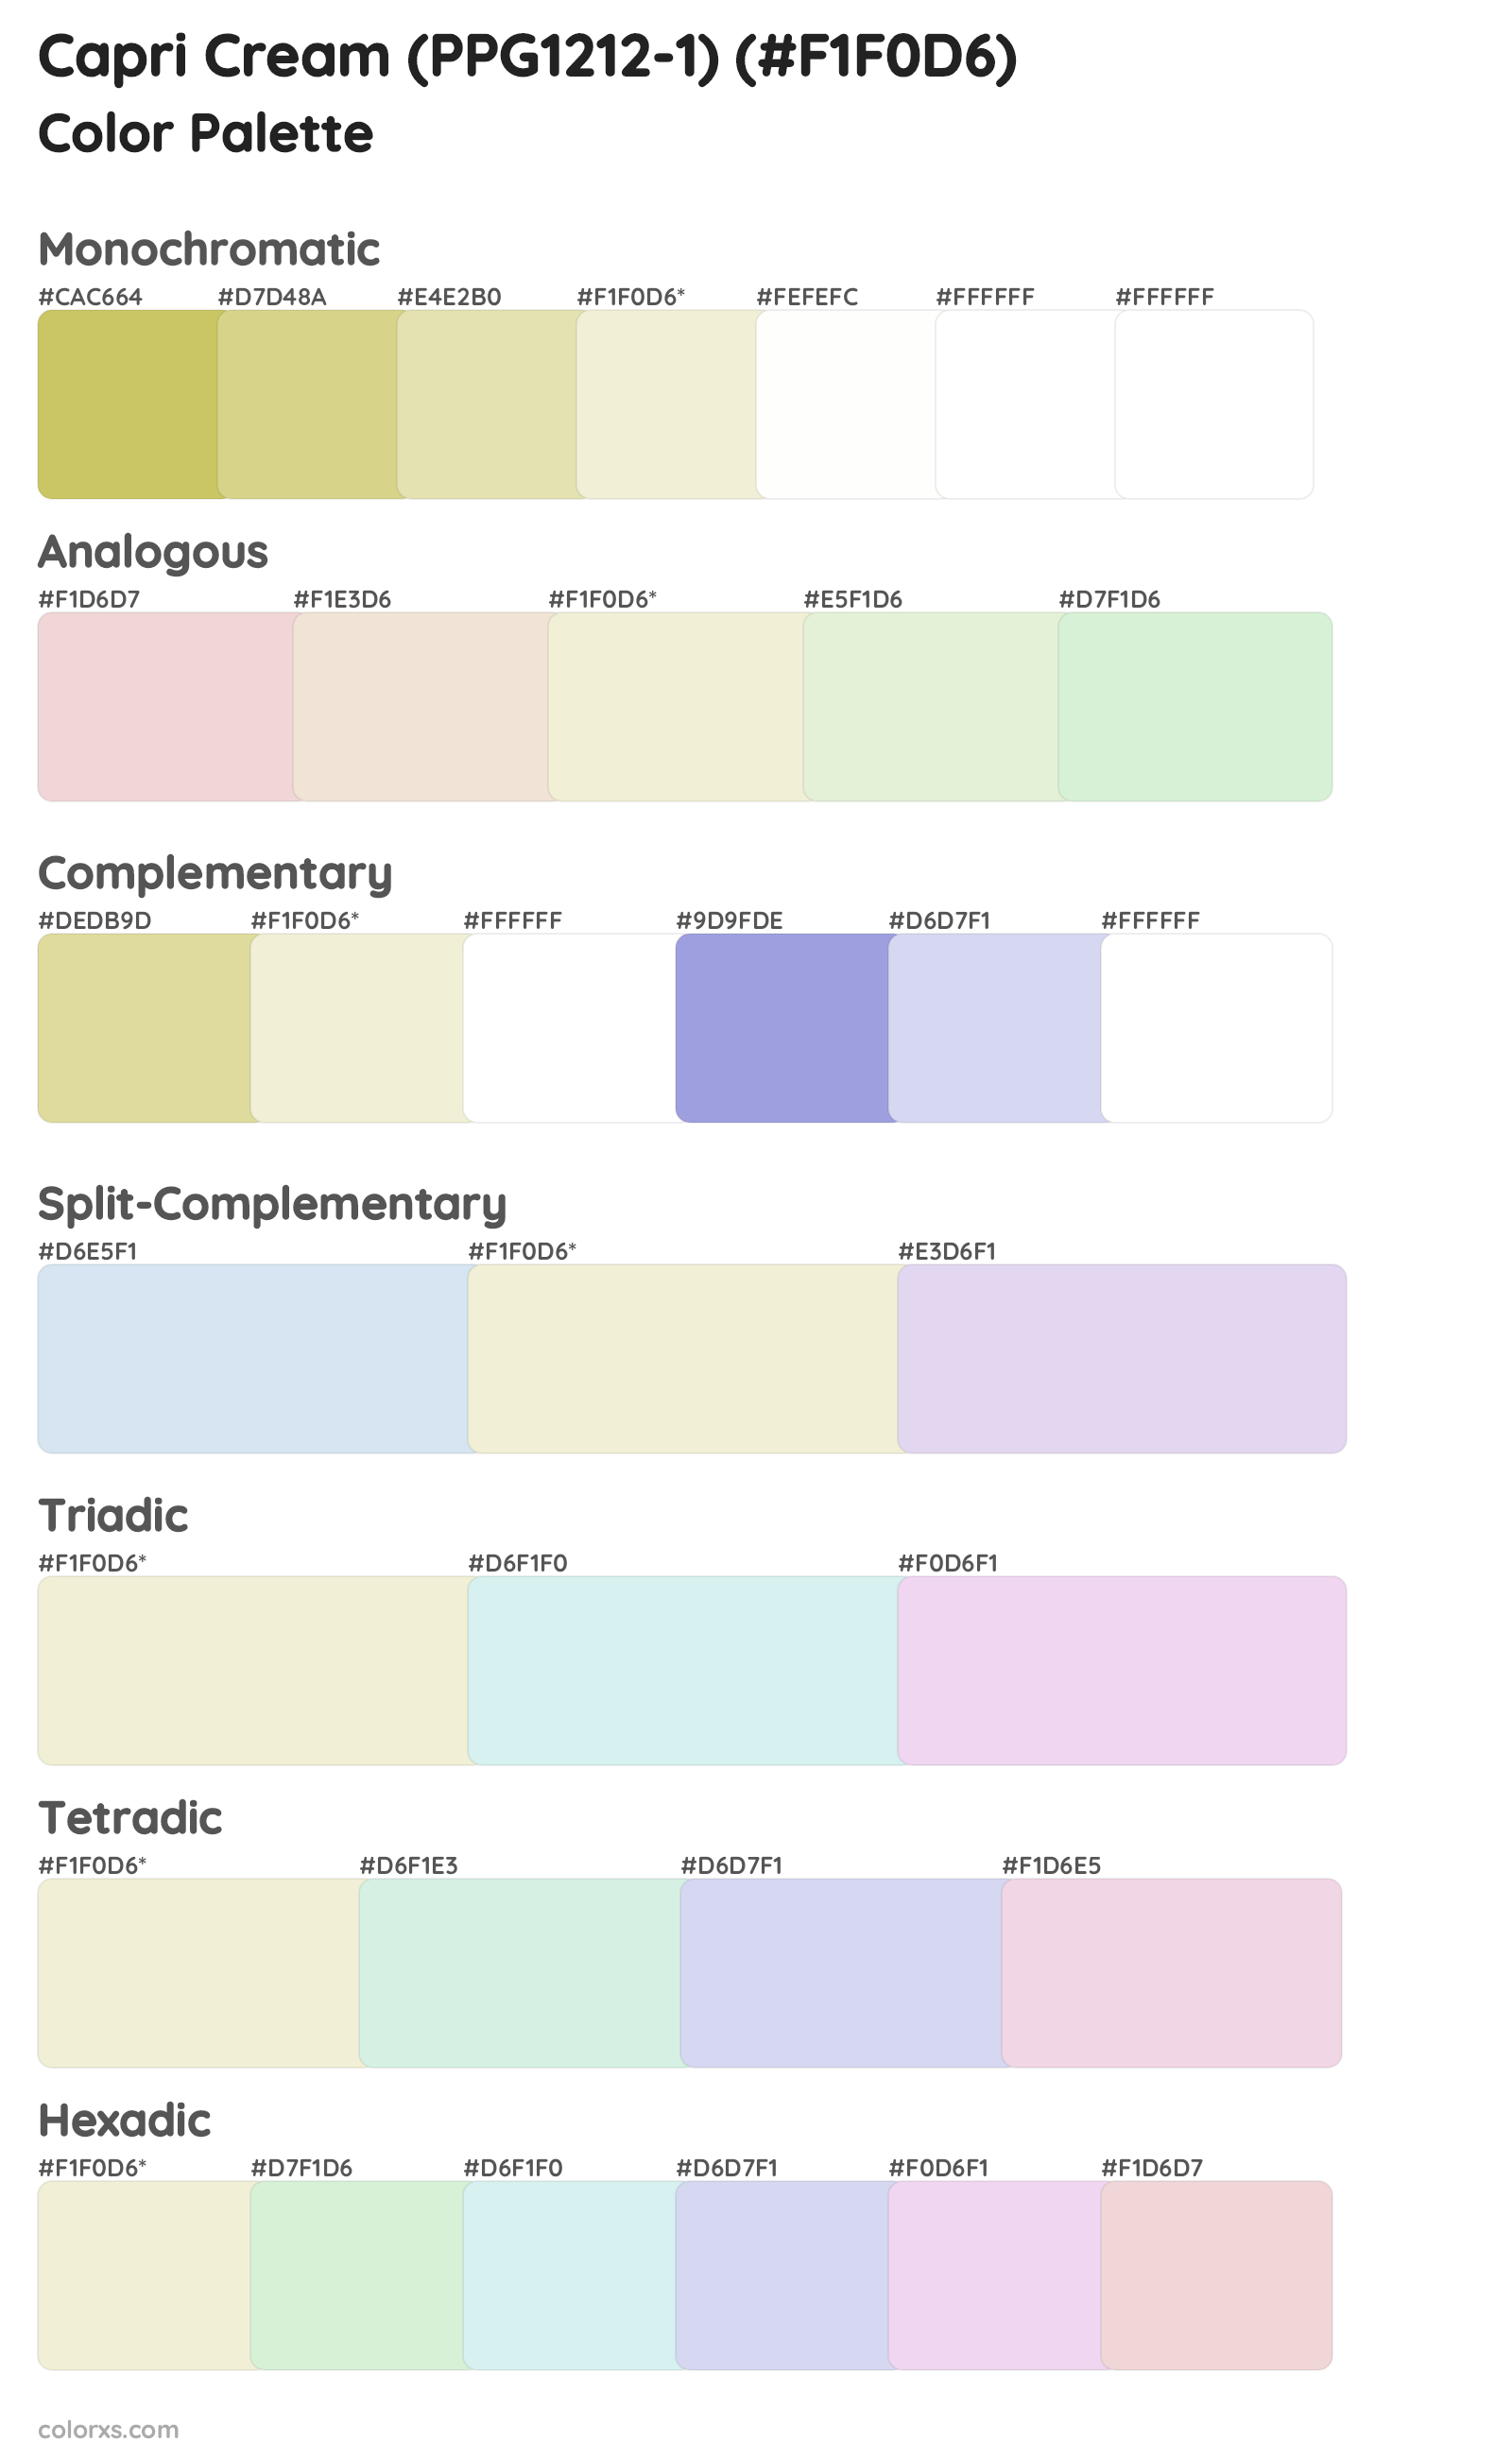 Capri Cream (PPG1212-1) Color Scheme Palettes